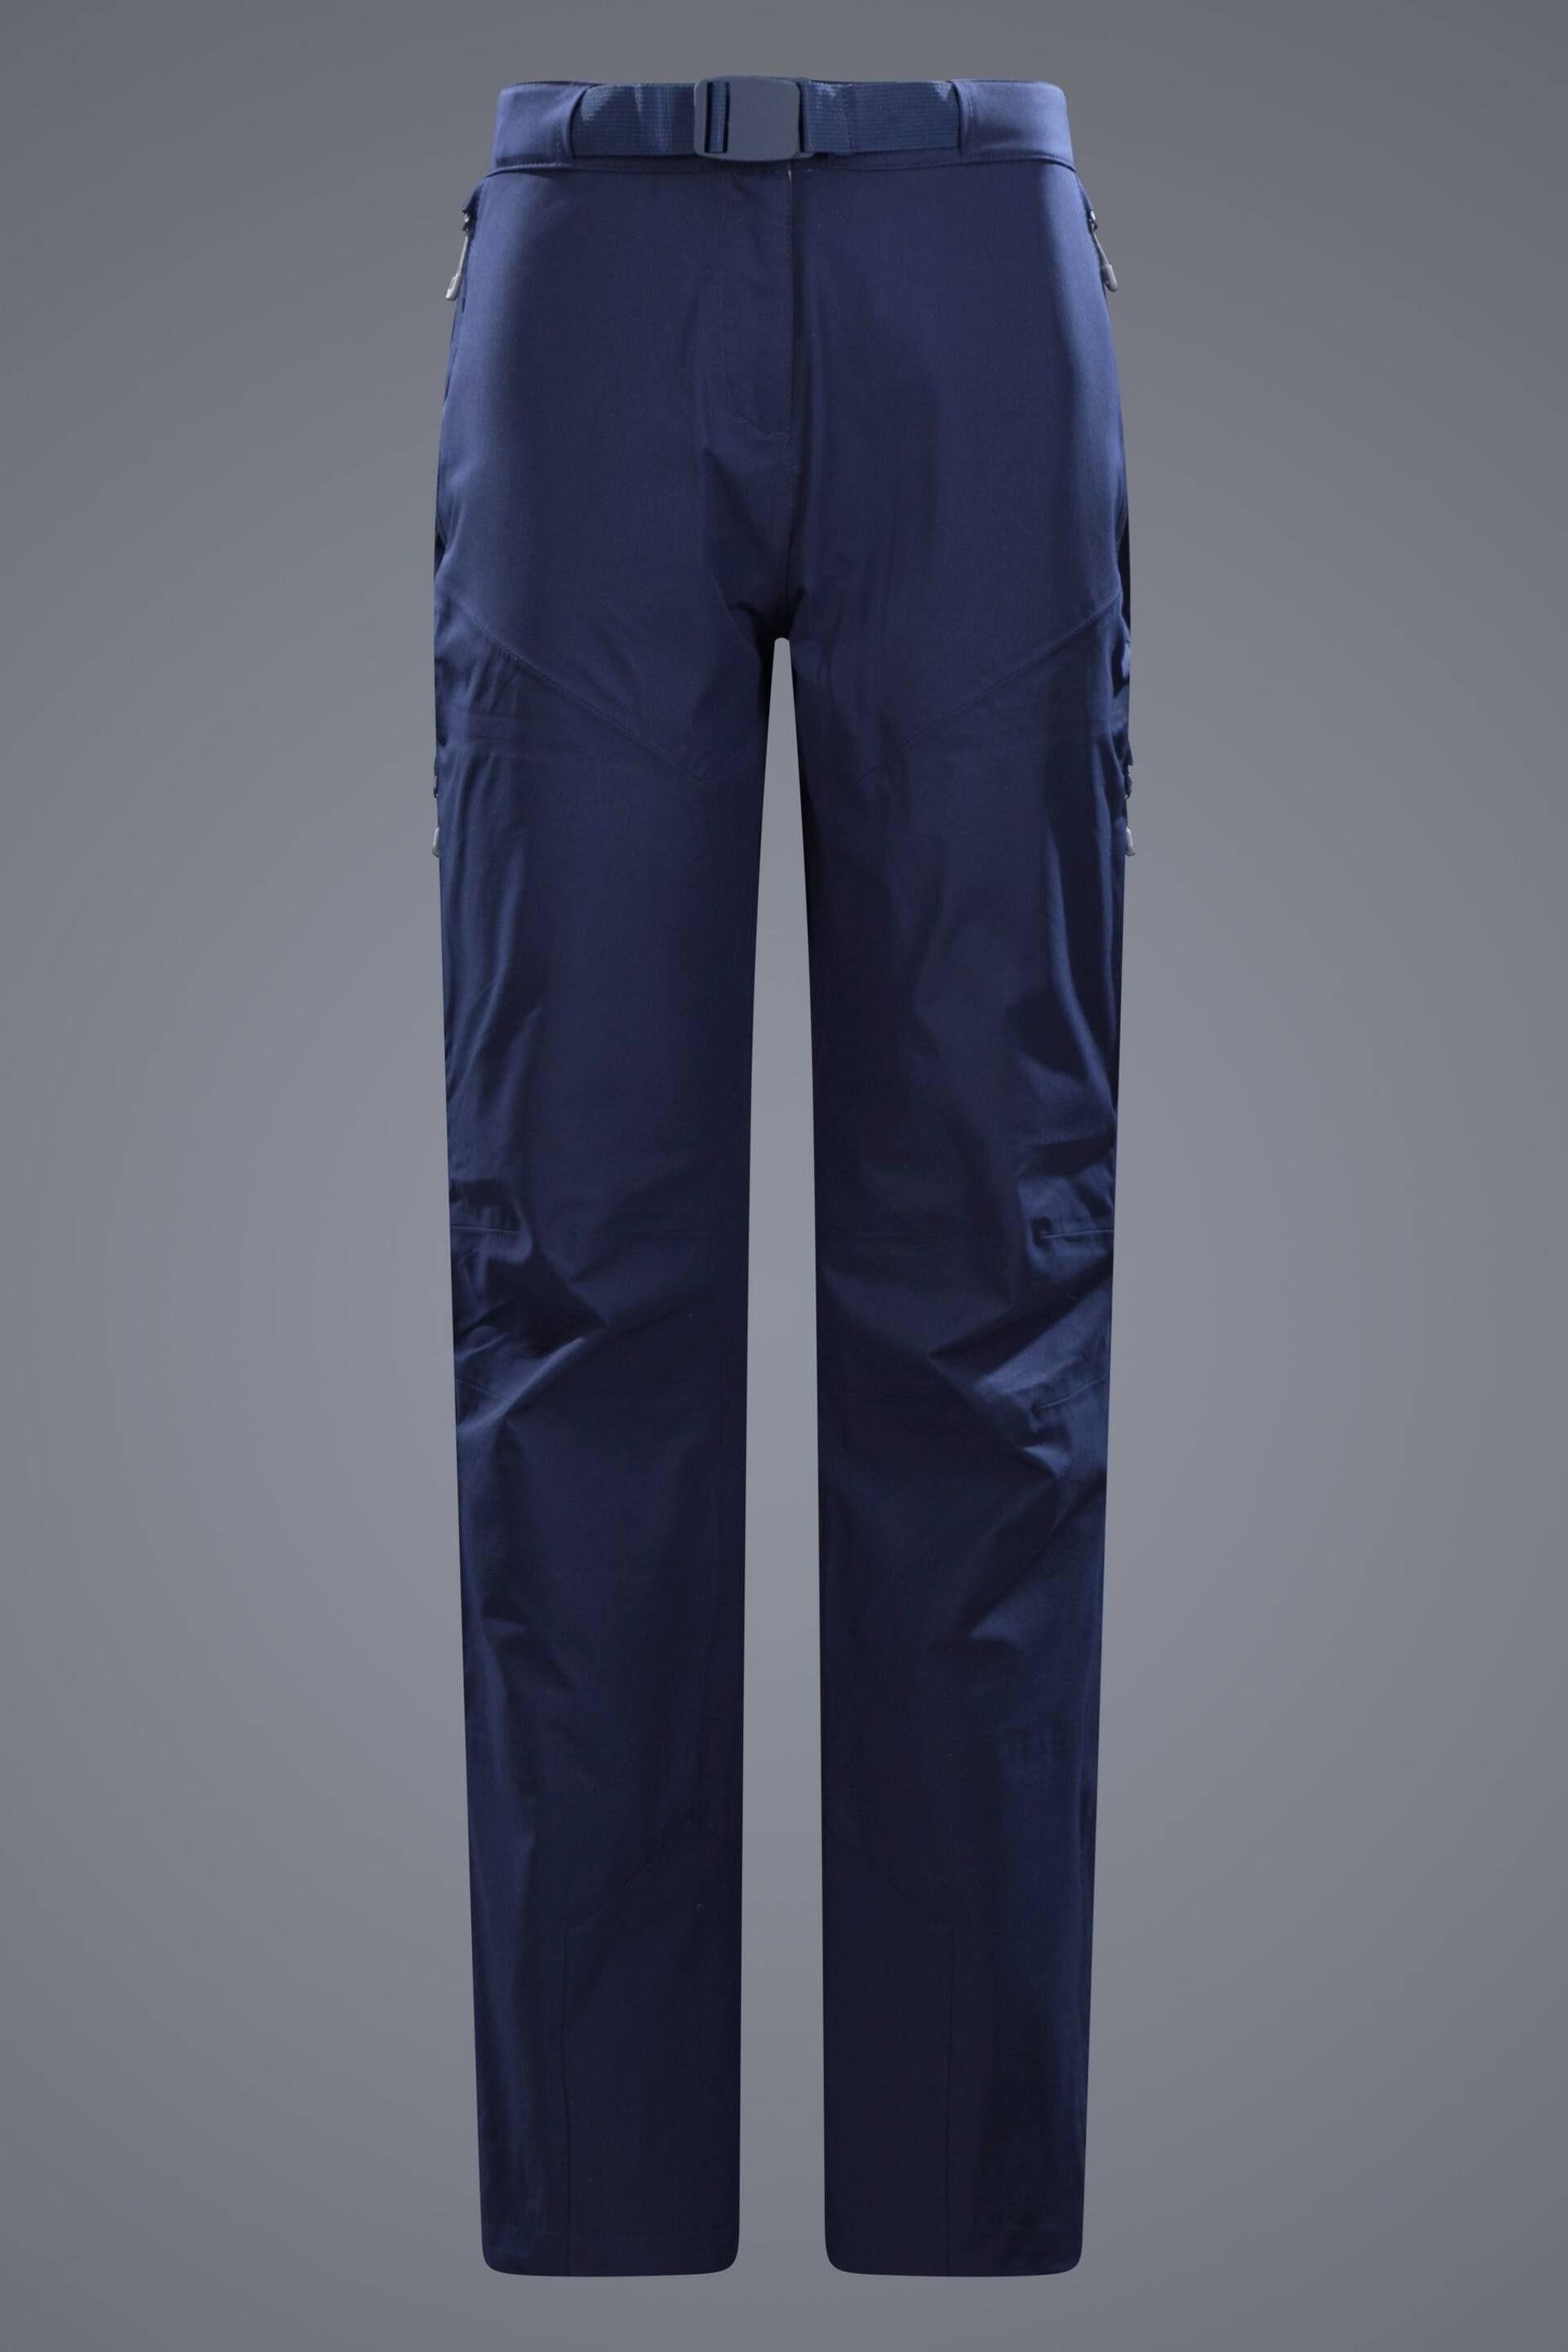 Mountain Warehouse Blue Womens Ultra Super Waterproof Trousers - Image 1 of 3